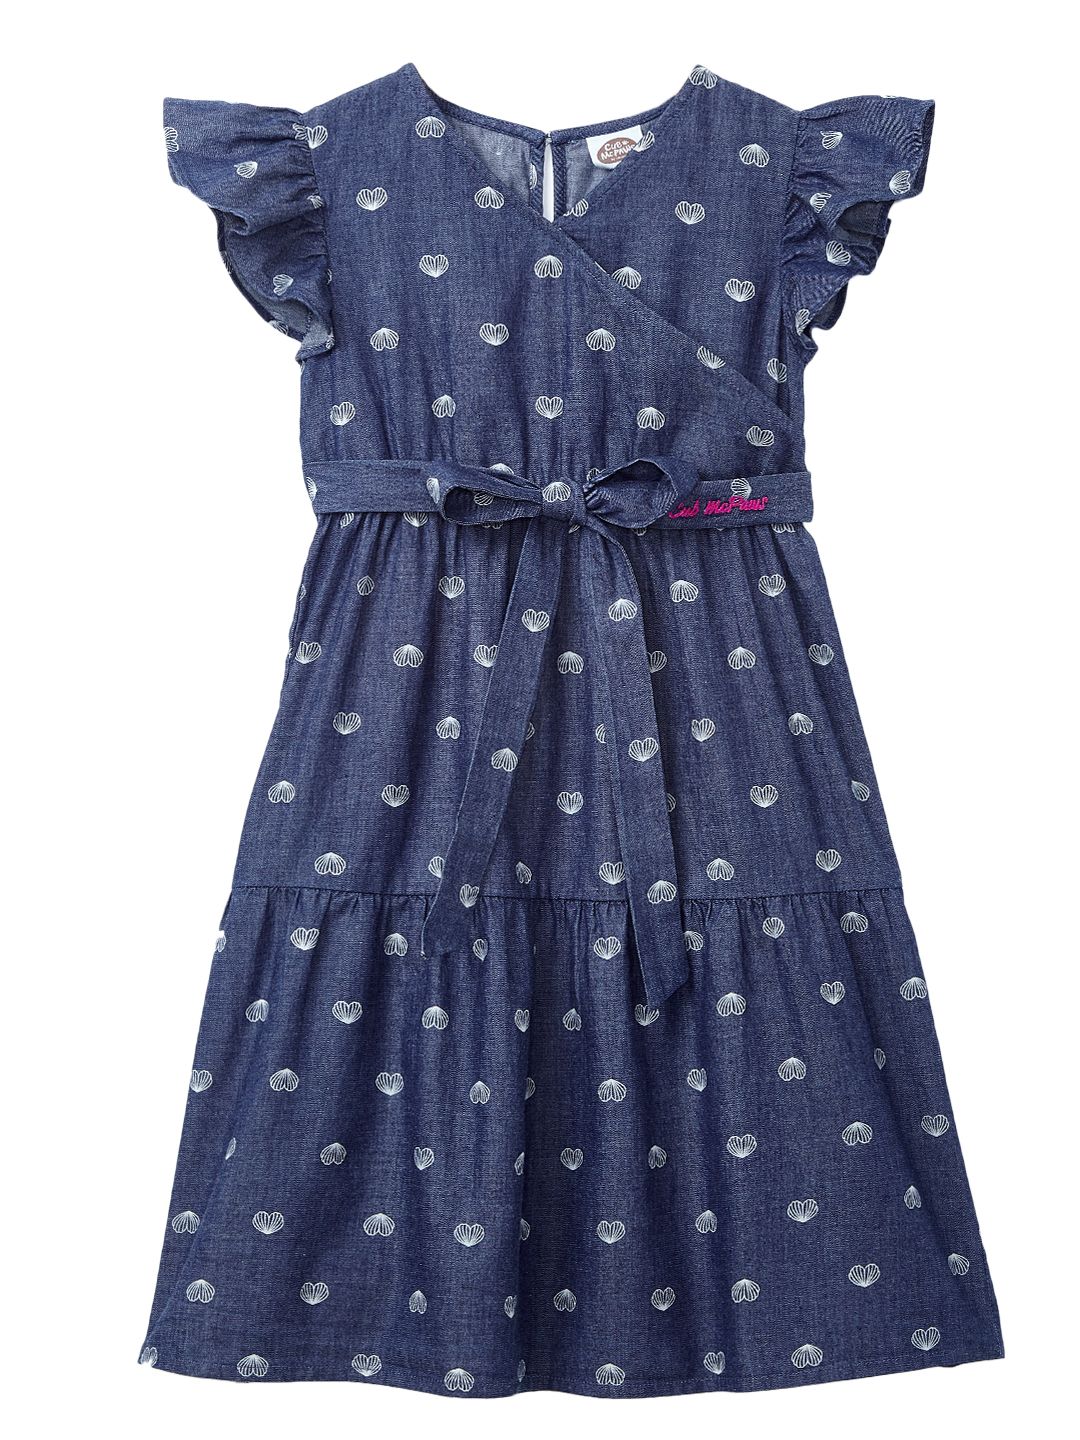 Girls Cap Sleeves Printed Rayon Blue Dress